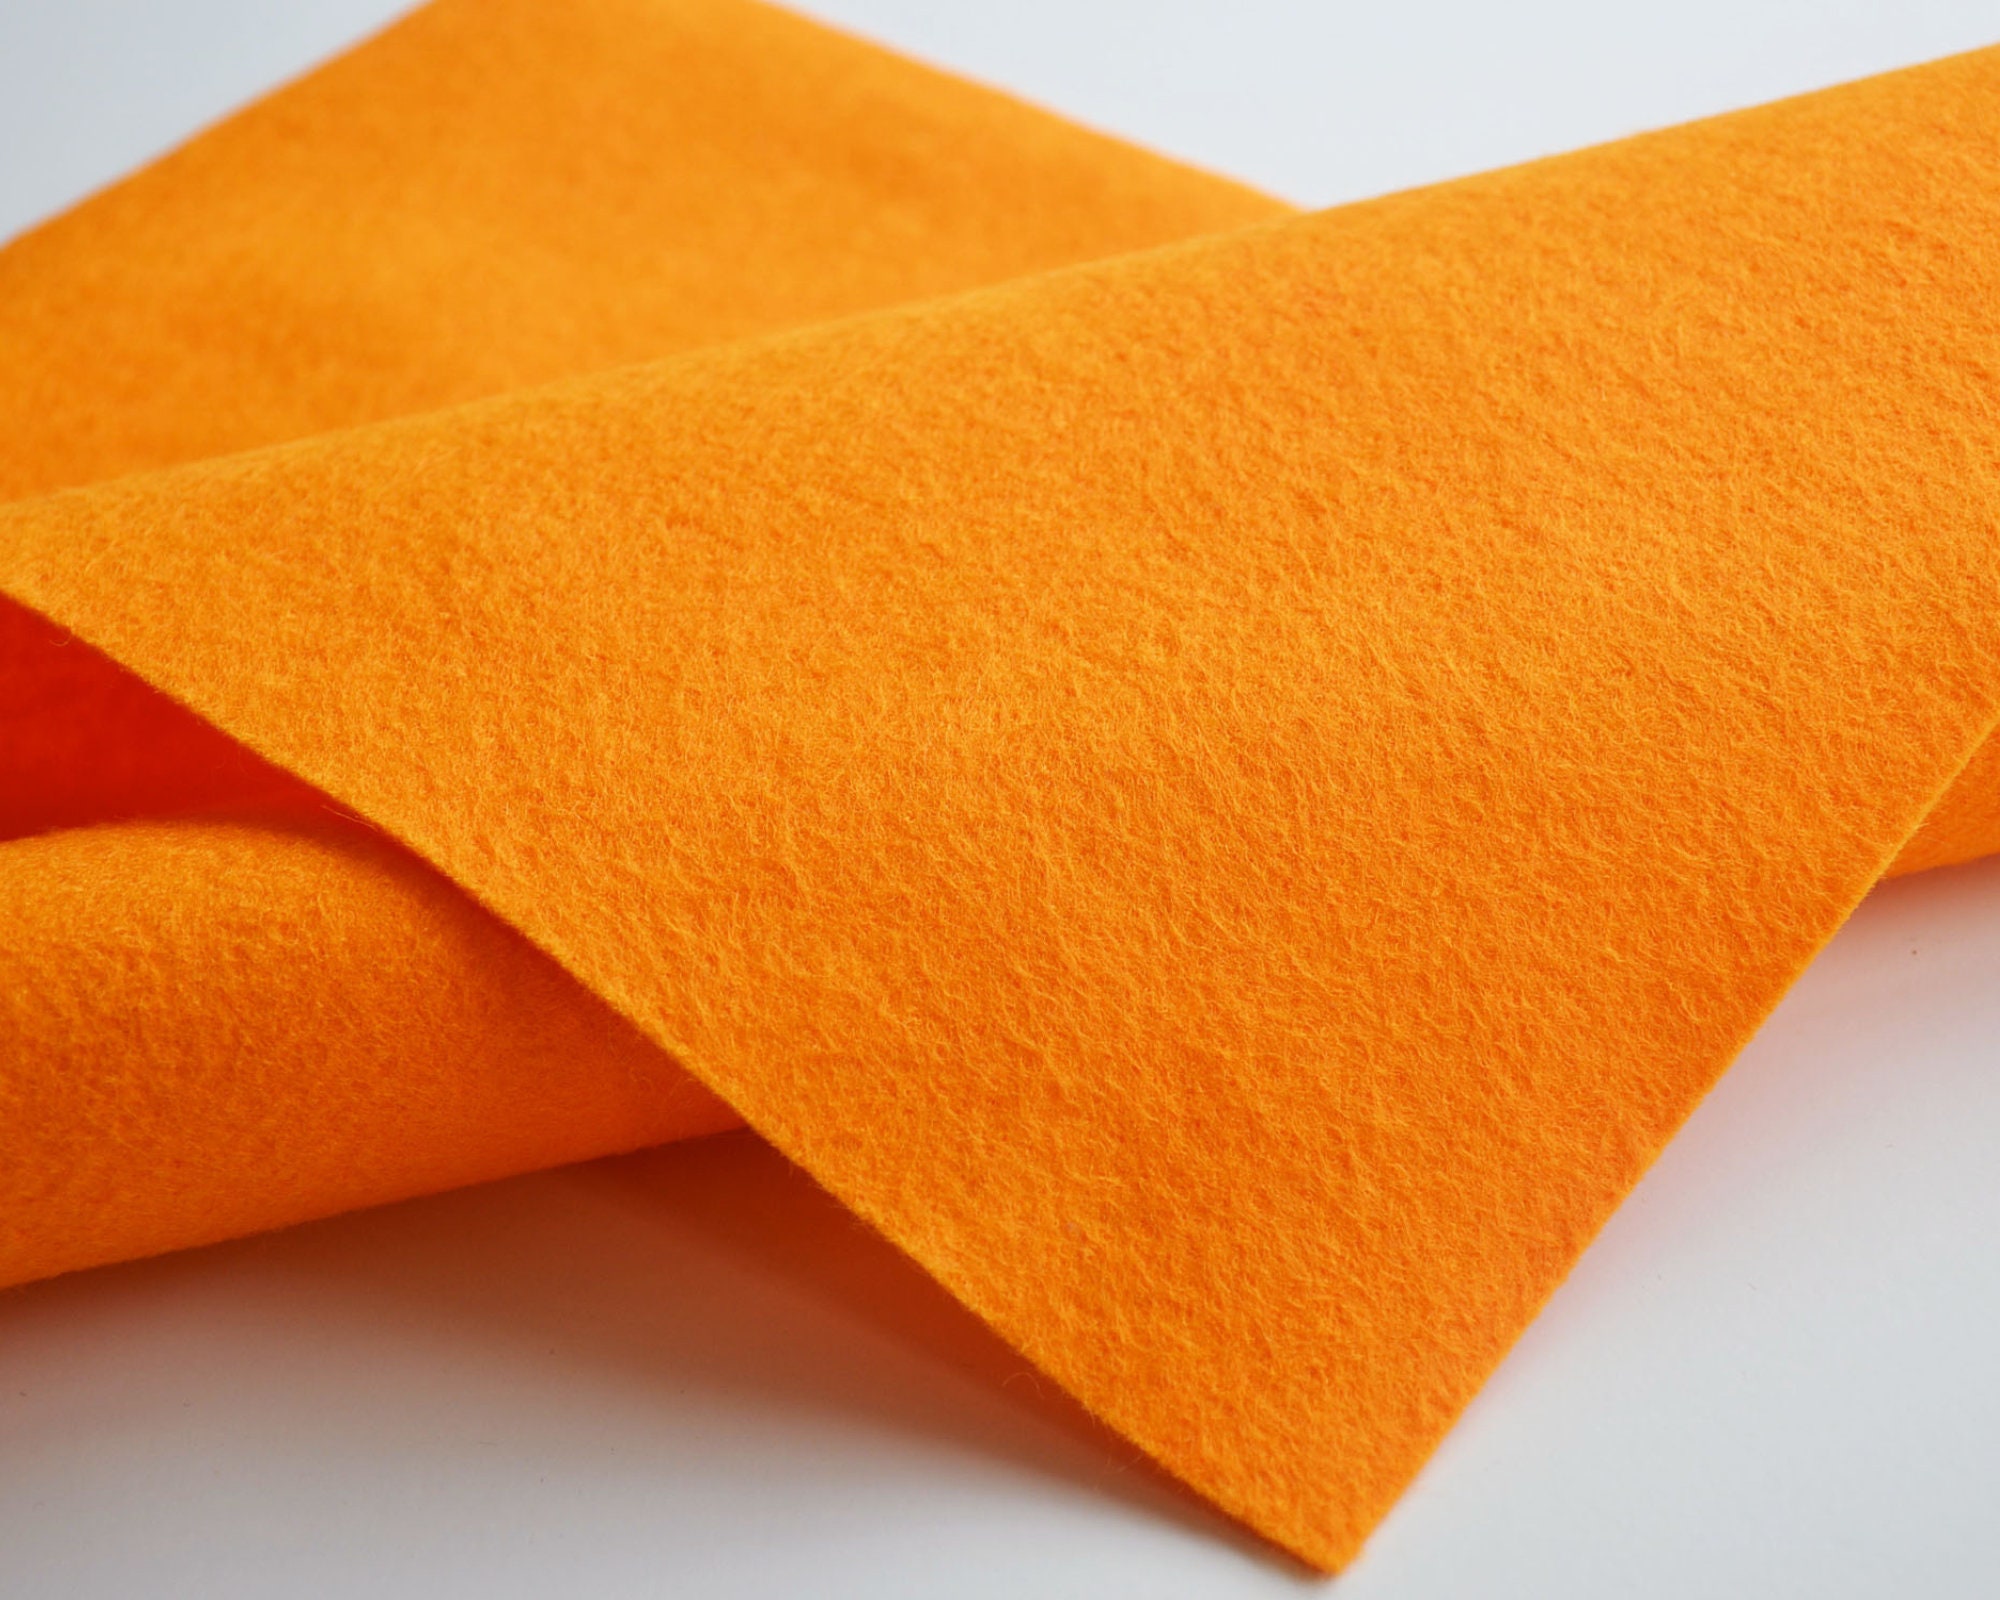 SUNBURST Wool Felt, Merino Wool Blend Felt, Wool Blend, Wool Felt Yardage  Wool Felt Fabric, Orange Felt Fabric, Orange Felt Yardage